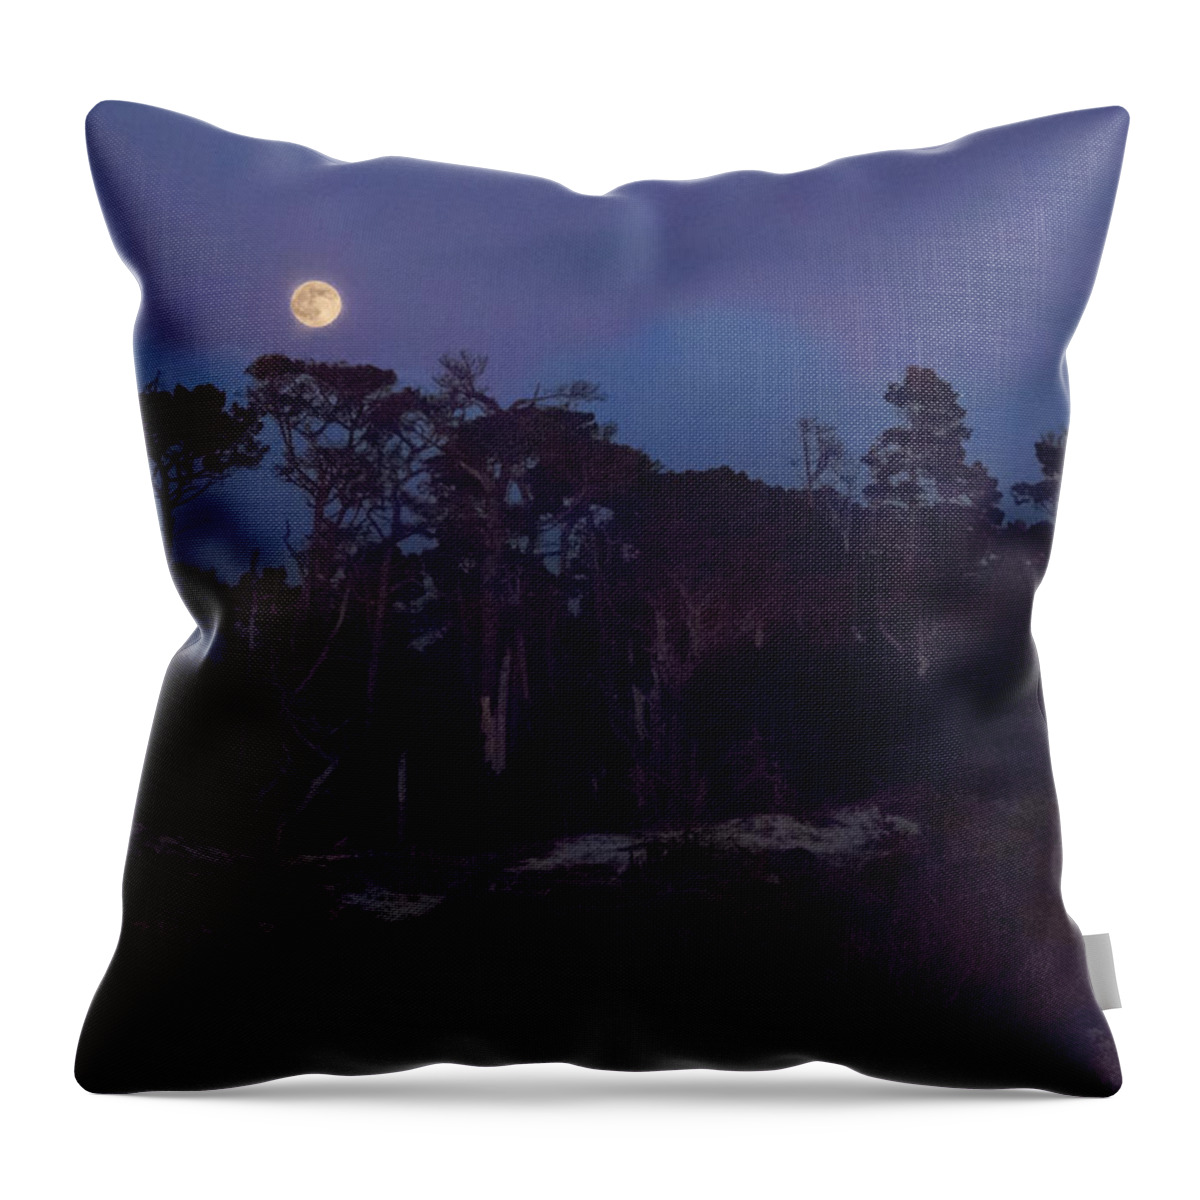 Moon Throw Pillow featuring the photograph Pebble Beach Moonrise by Derek Dean